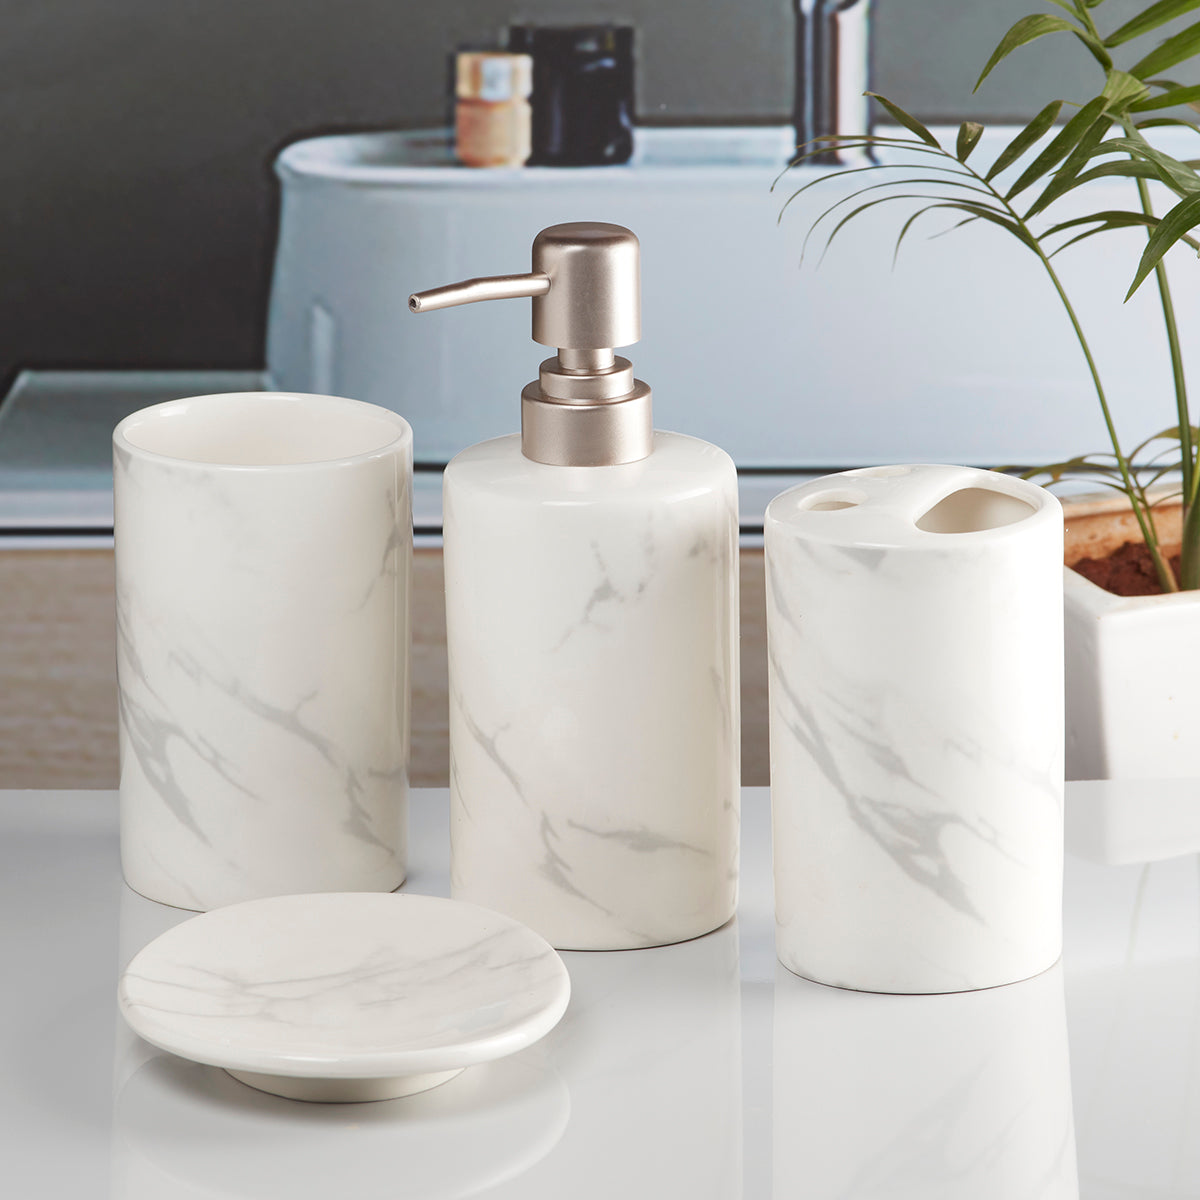 Ceramic Bathroom Accessories Set of 4 Bath Set with Soap Dispenser (8478)